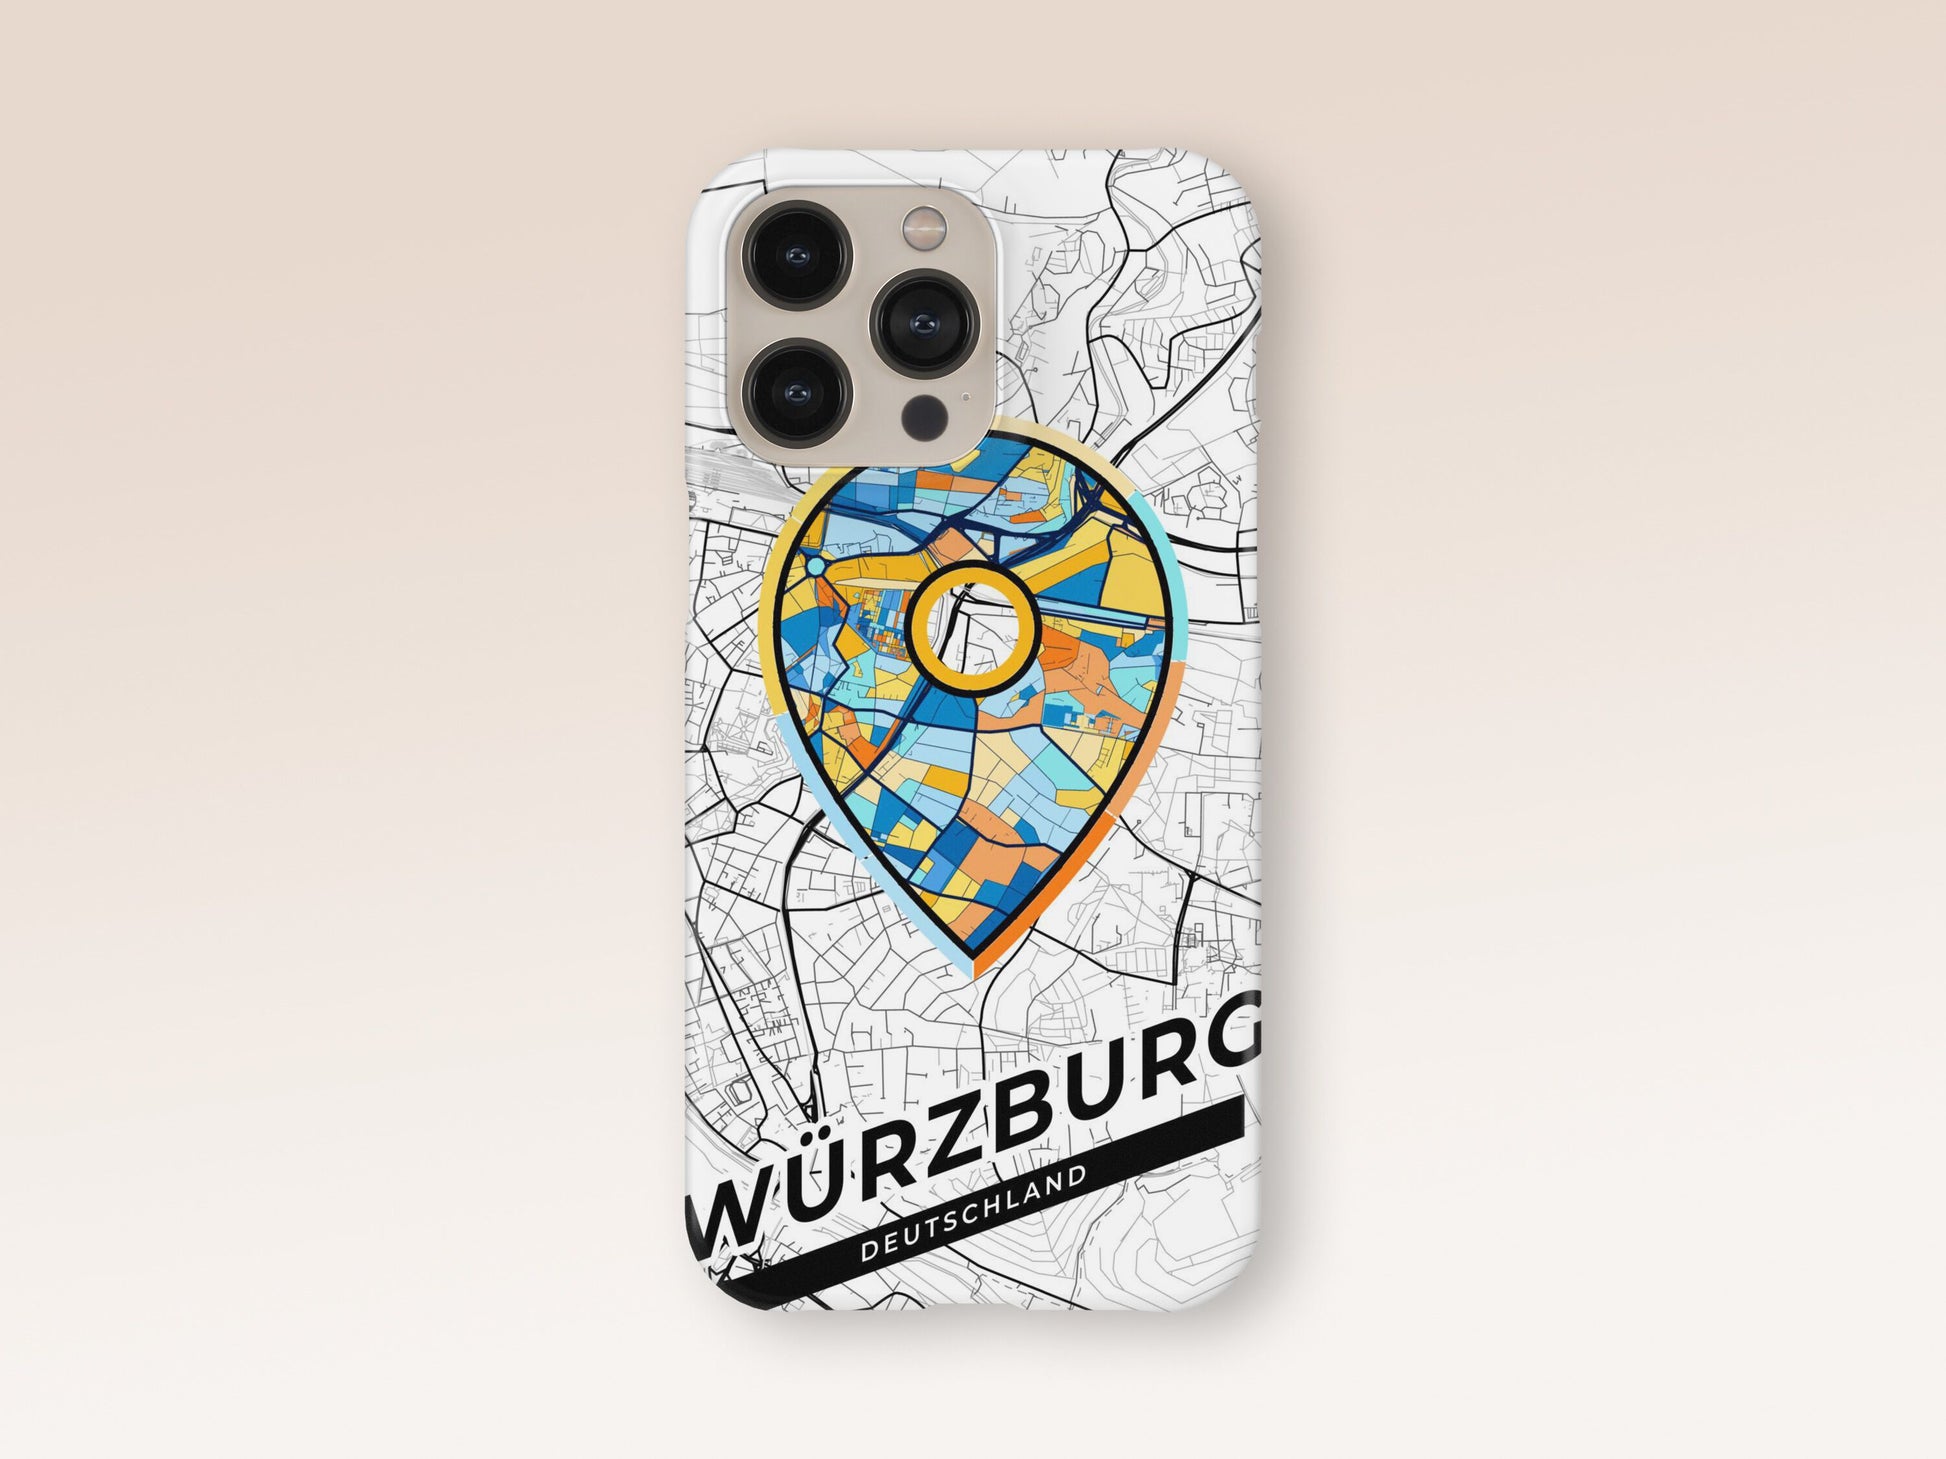 Würzburg Deutschland slim phone case with colorful icon. Birthday, wedding or housewarming gift. Couple match cases. 1